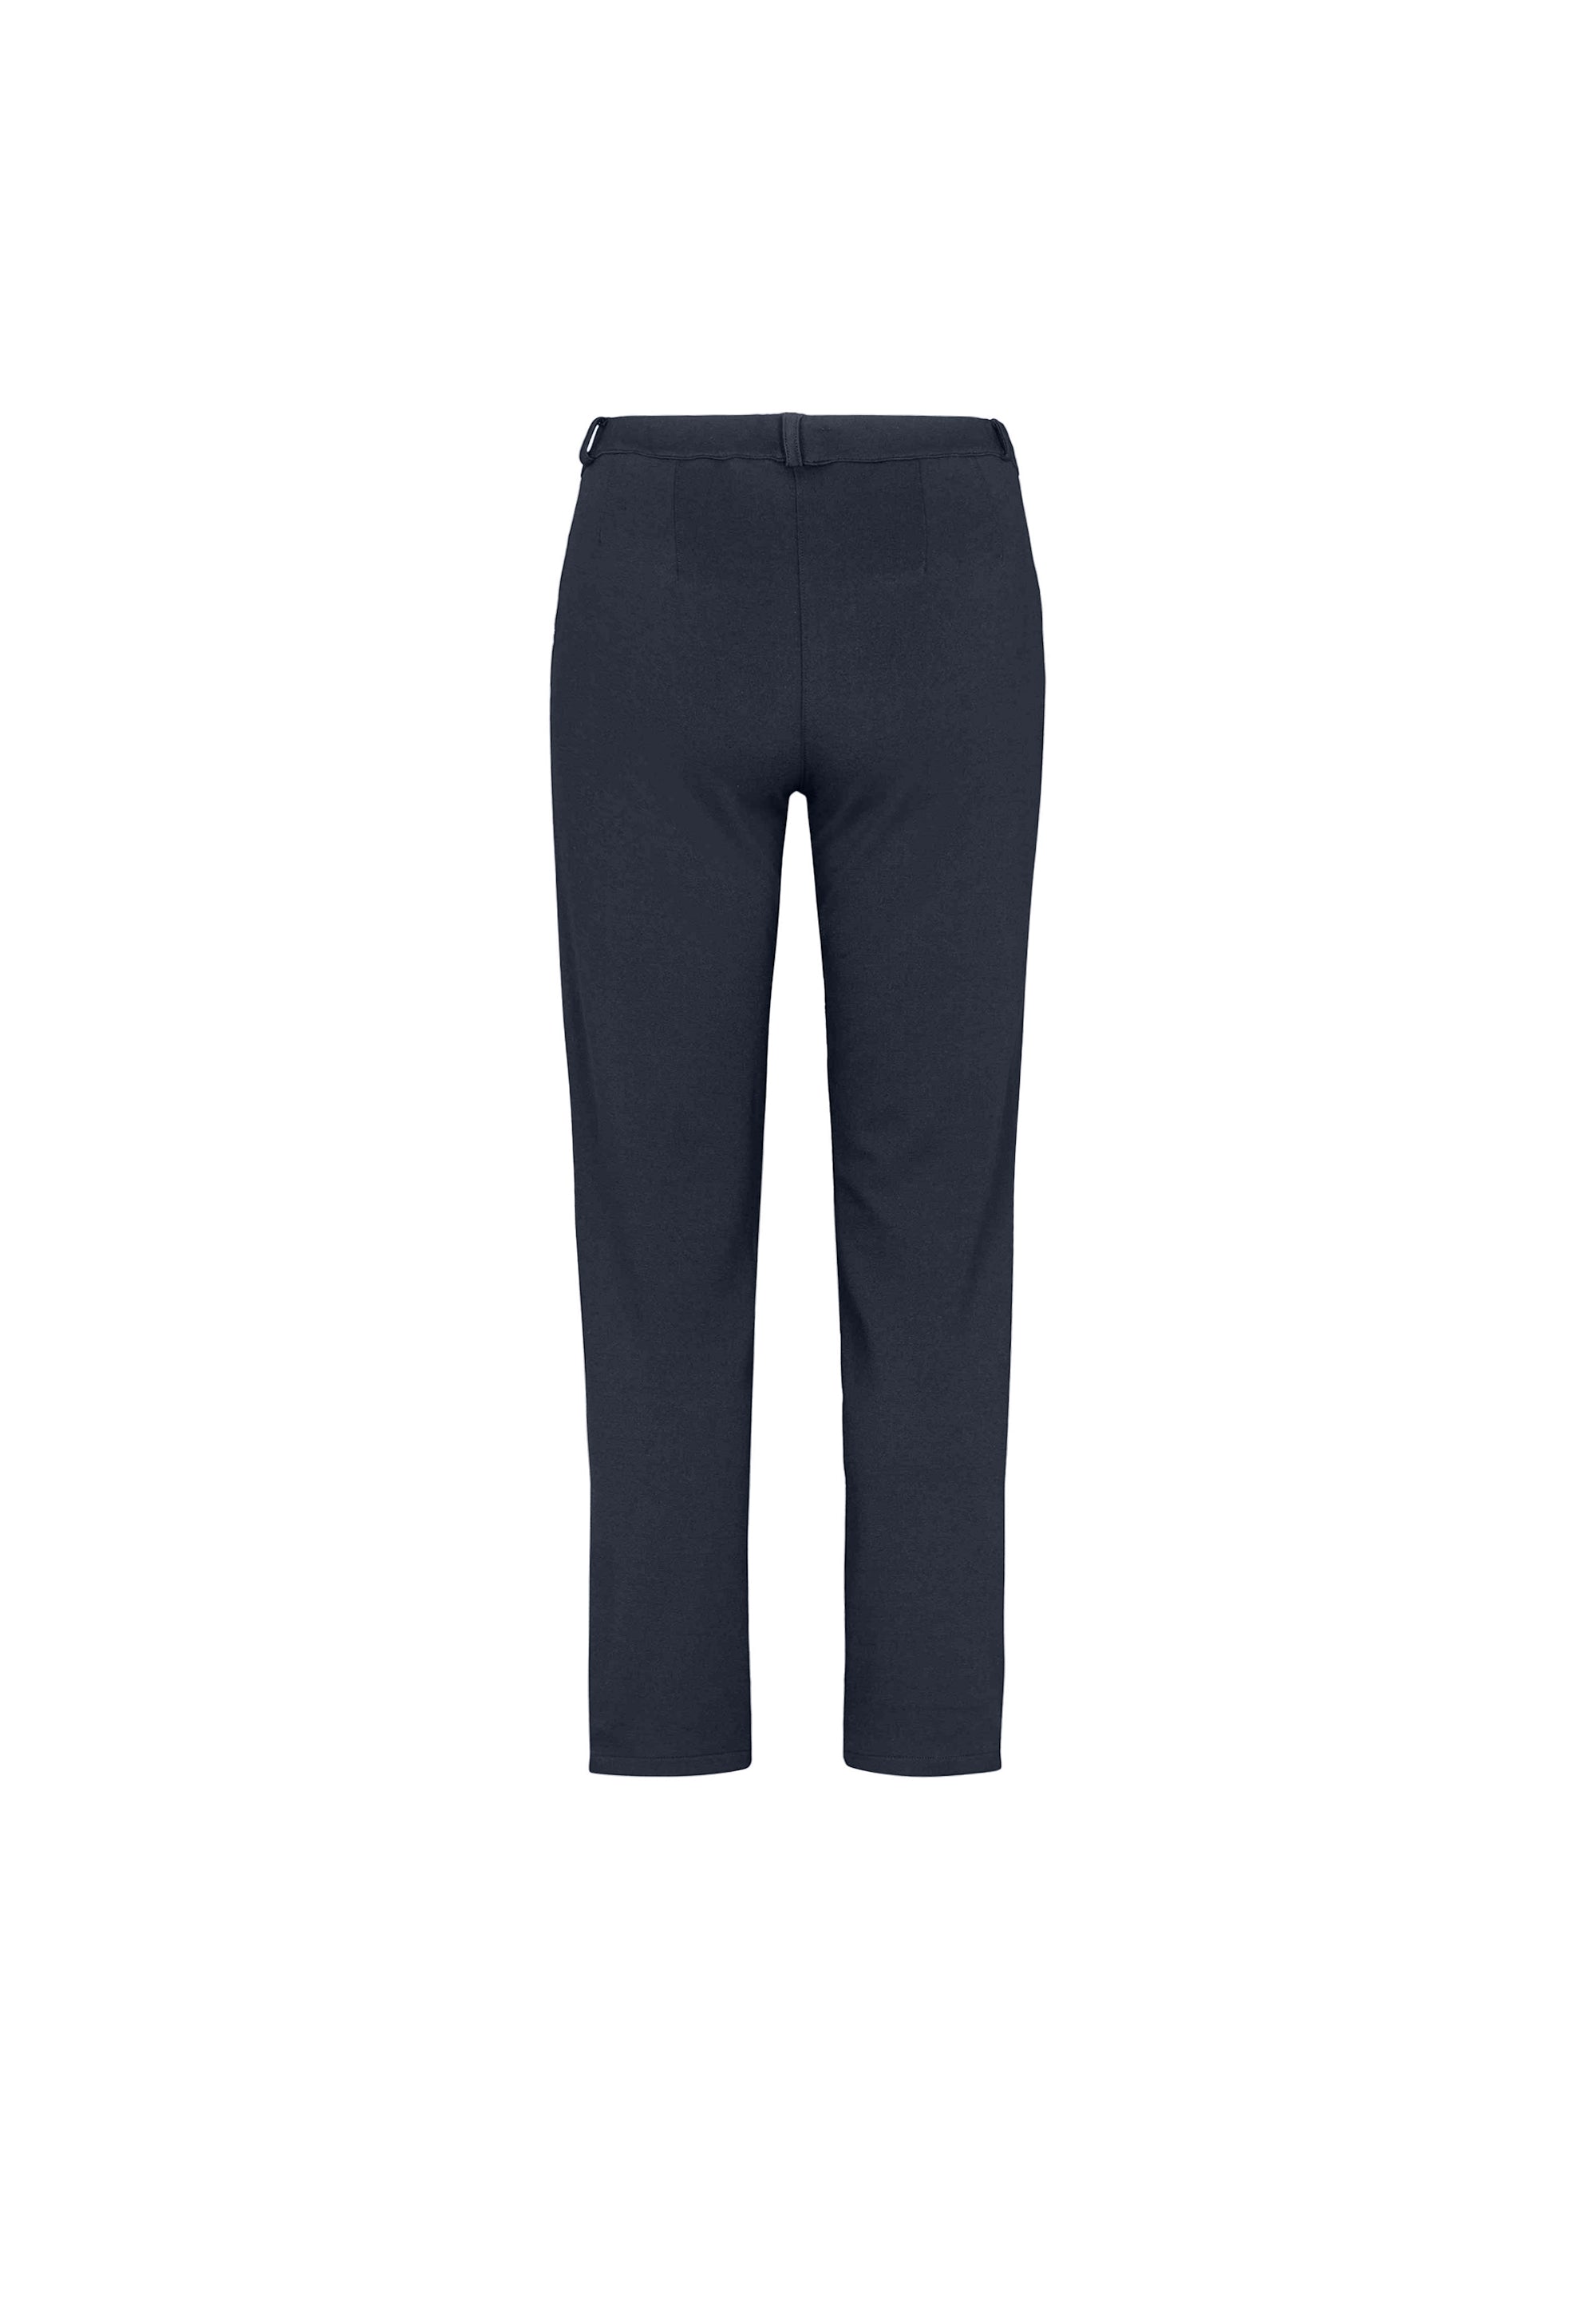 LAURIE  Rylie Regular - Short Length Trousers REGULAR 49103 Navy brushed